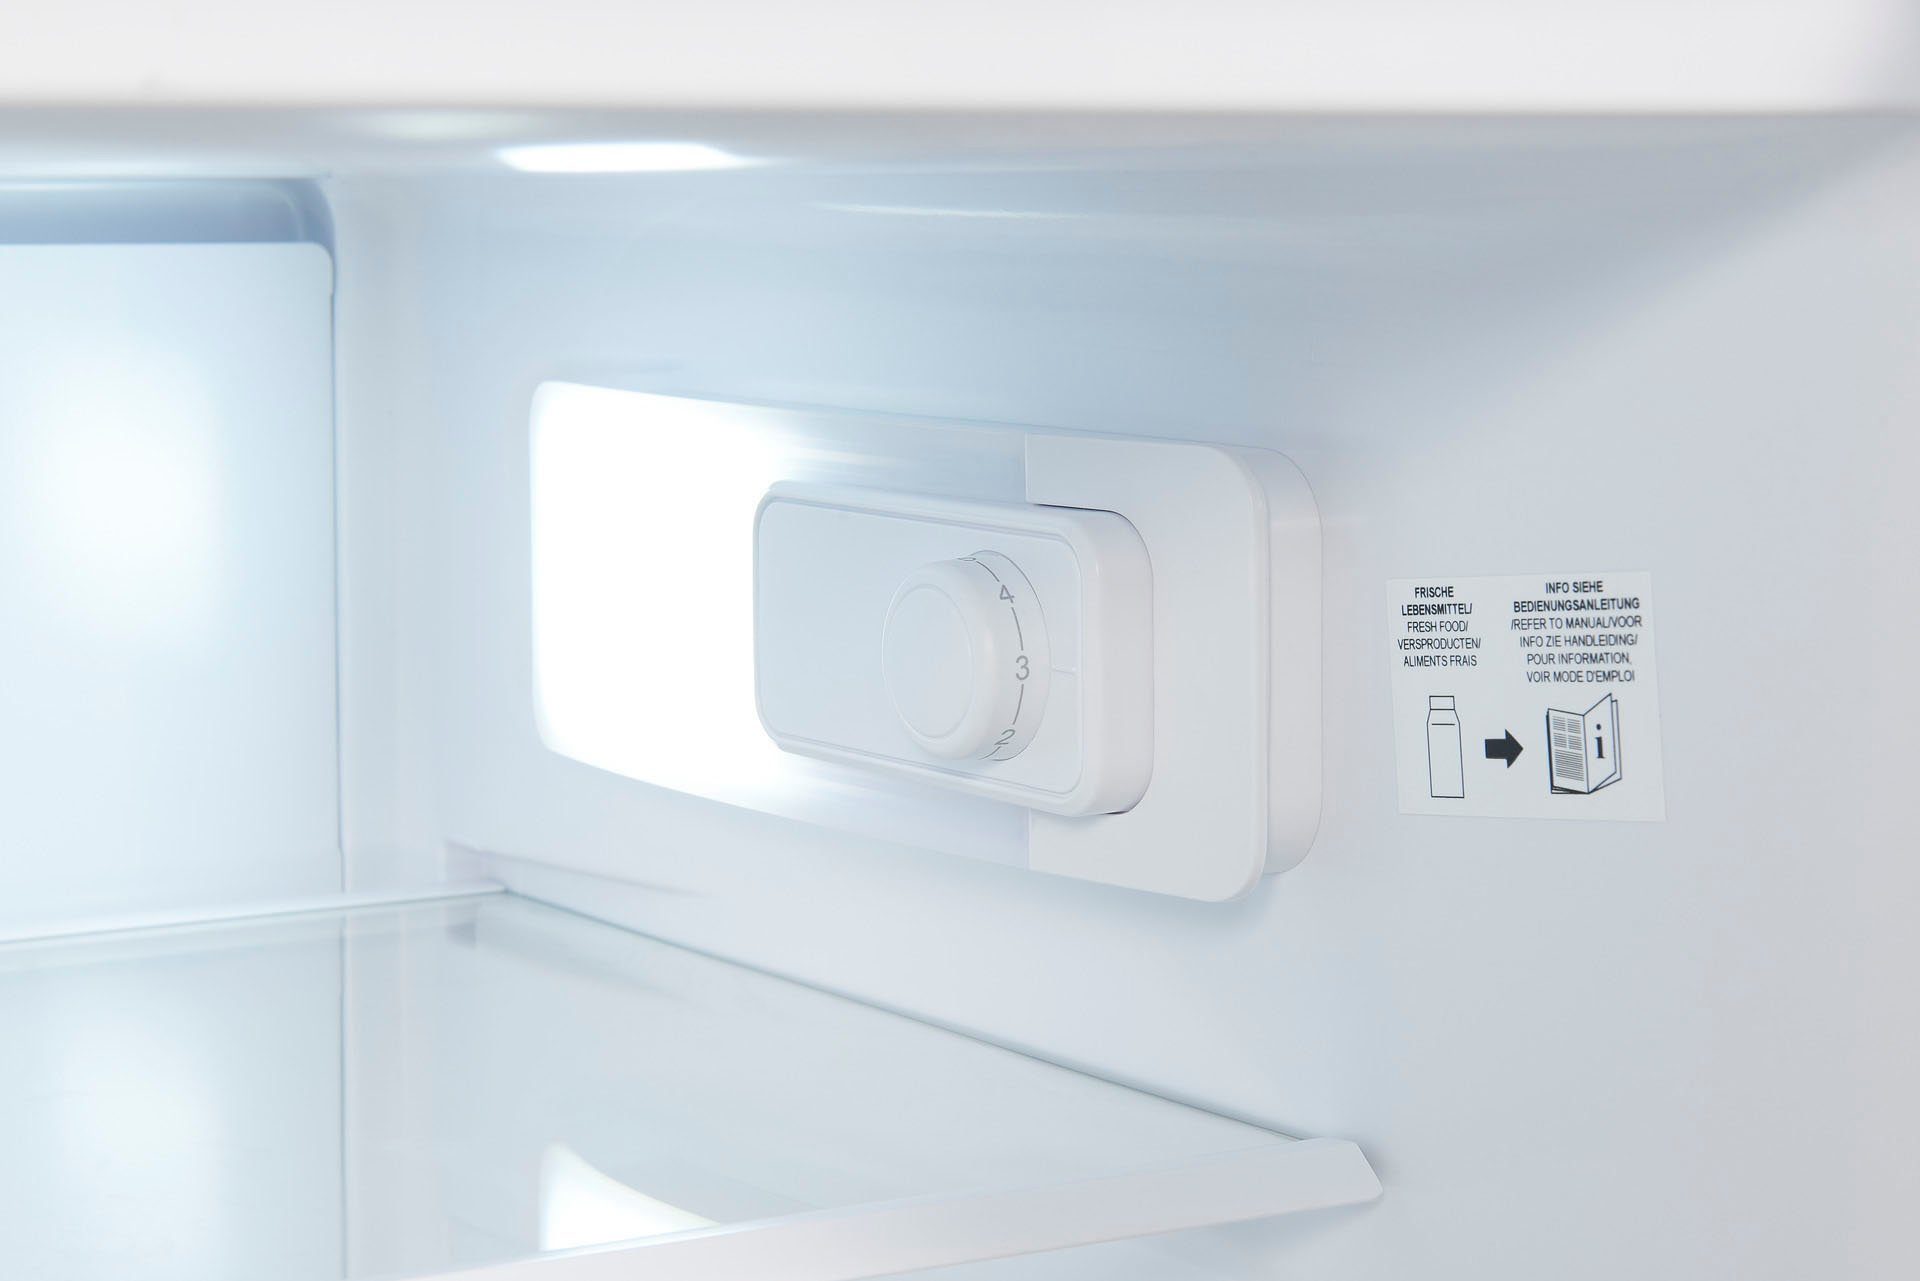 exquisit Kühlschrank KS15-V-040E weiss, 85 55 breit cm hoch, cm